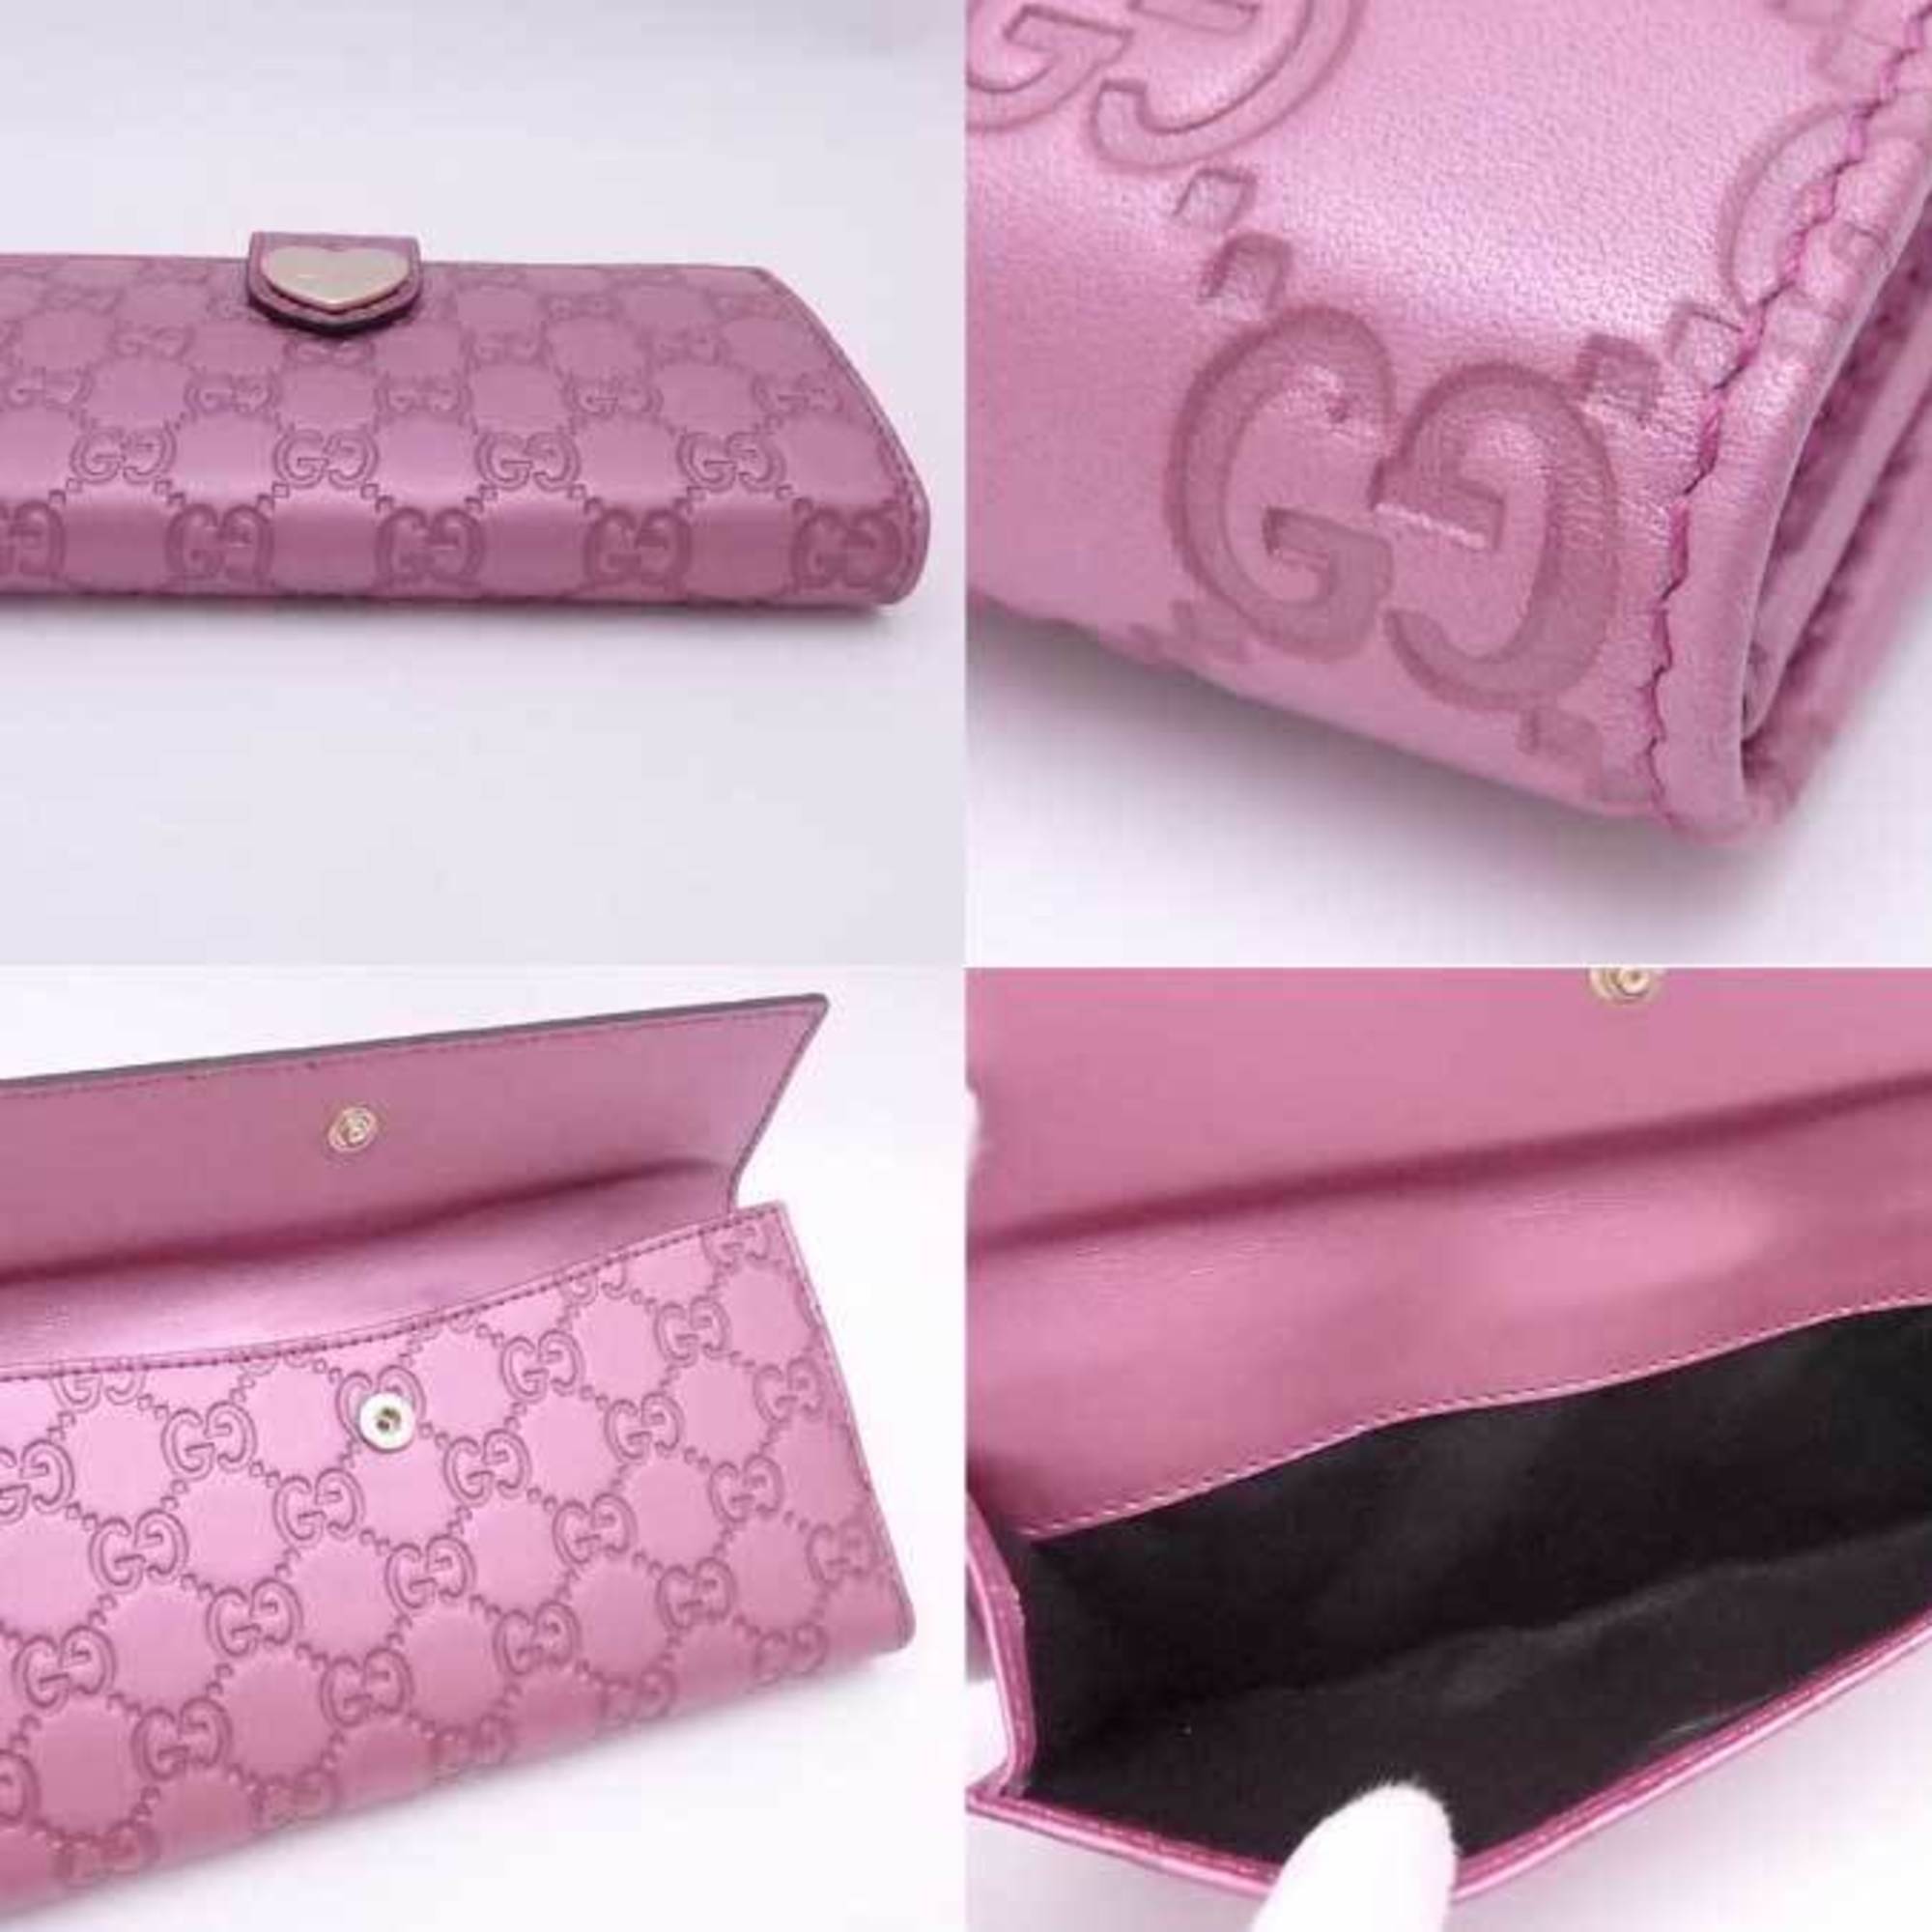 Gucci GUCCI bi-fold long wallet sima leather metallic pink purple gold ladies 203550